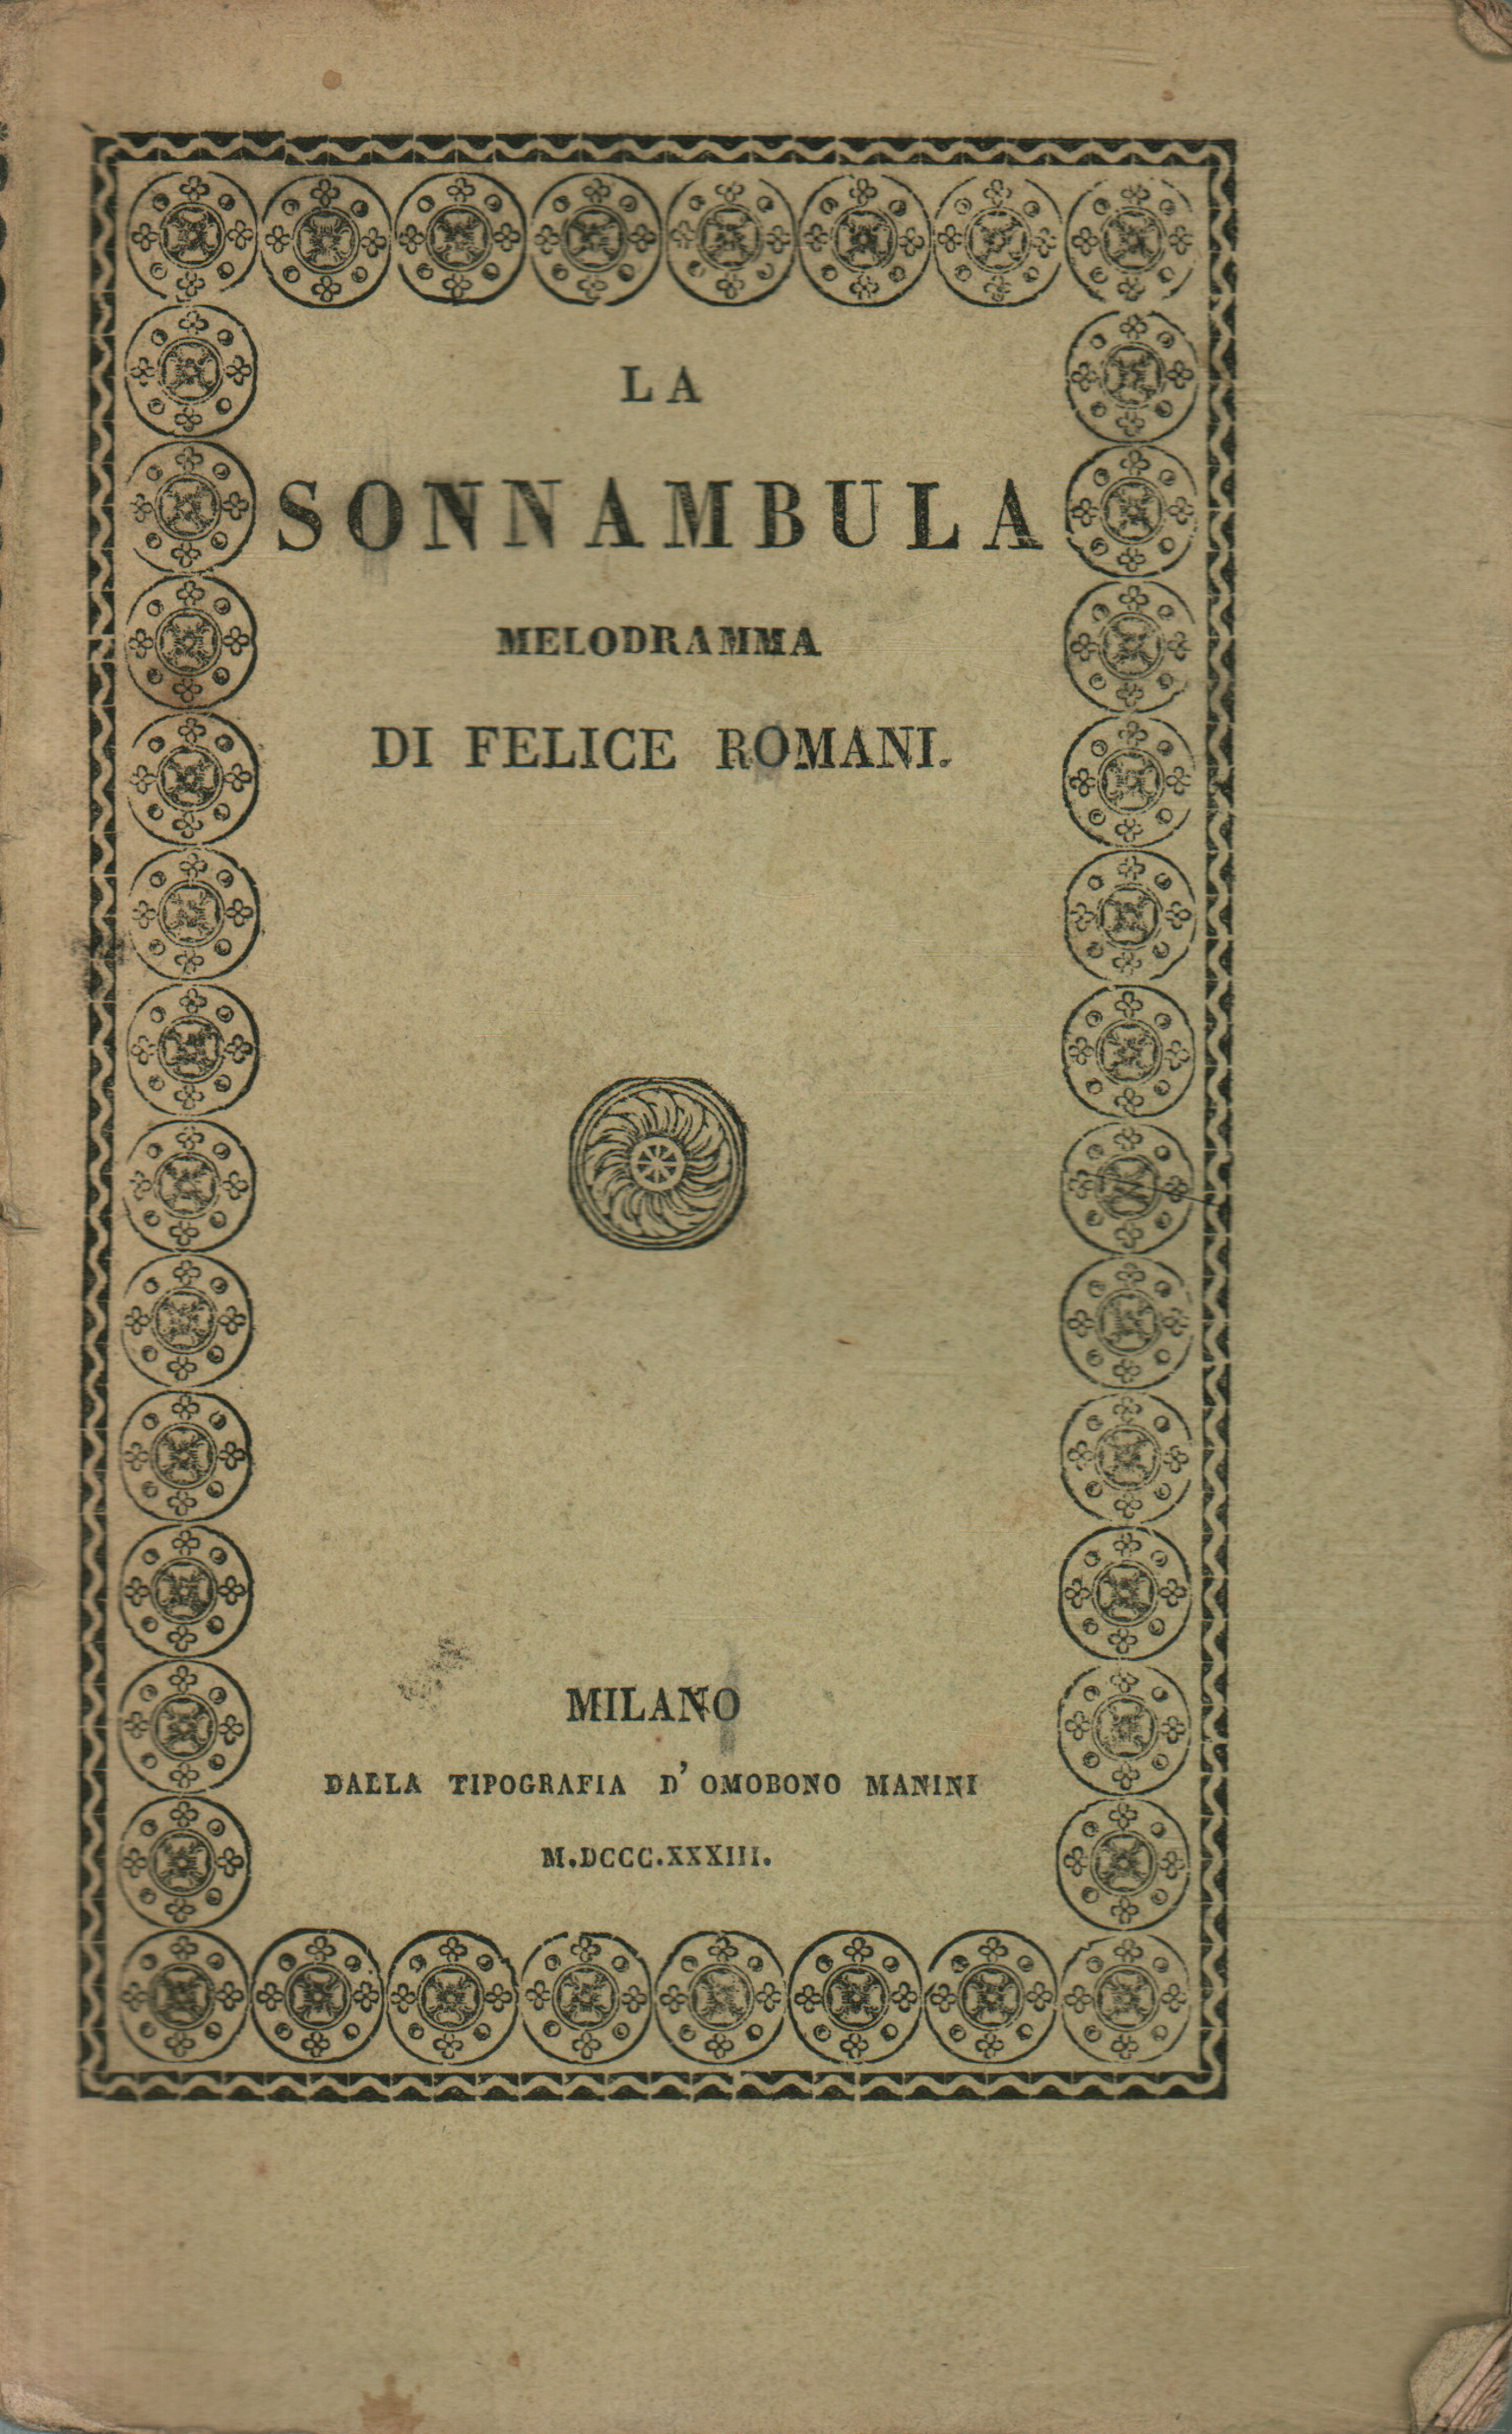 La sonnambula melodrama by Felice Roma,La sonnambula melodrama by Felice Roma,La sonnambula melodrama by Felice Roma,La sonnambula melodrama by Felice Roma